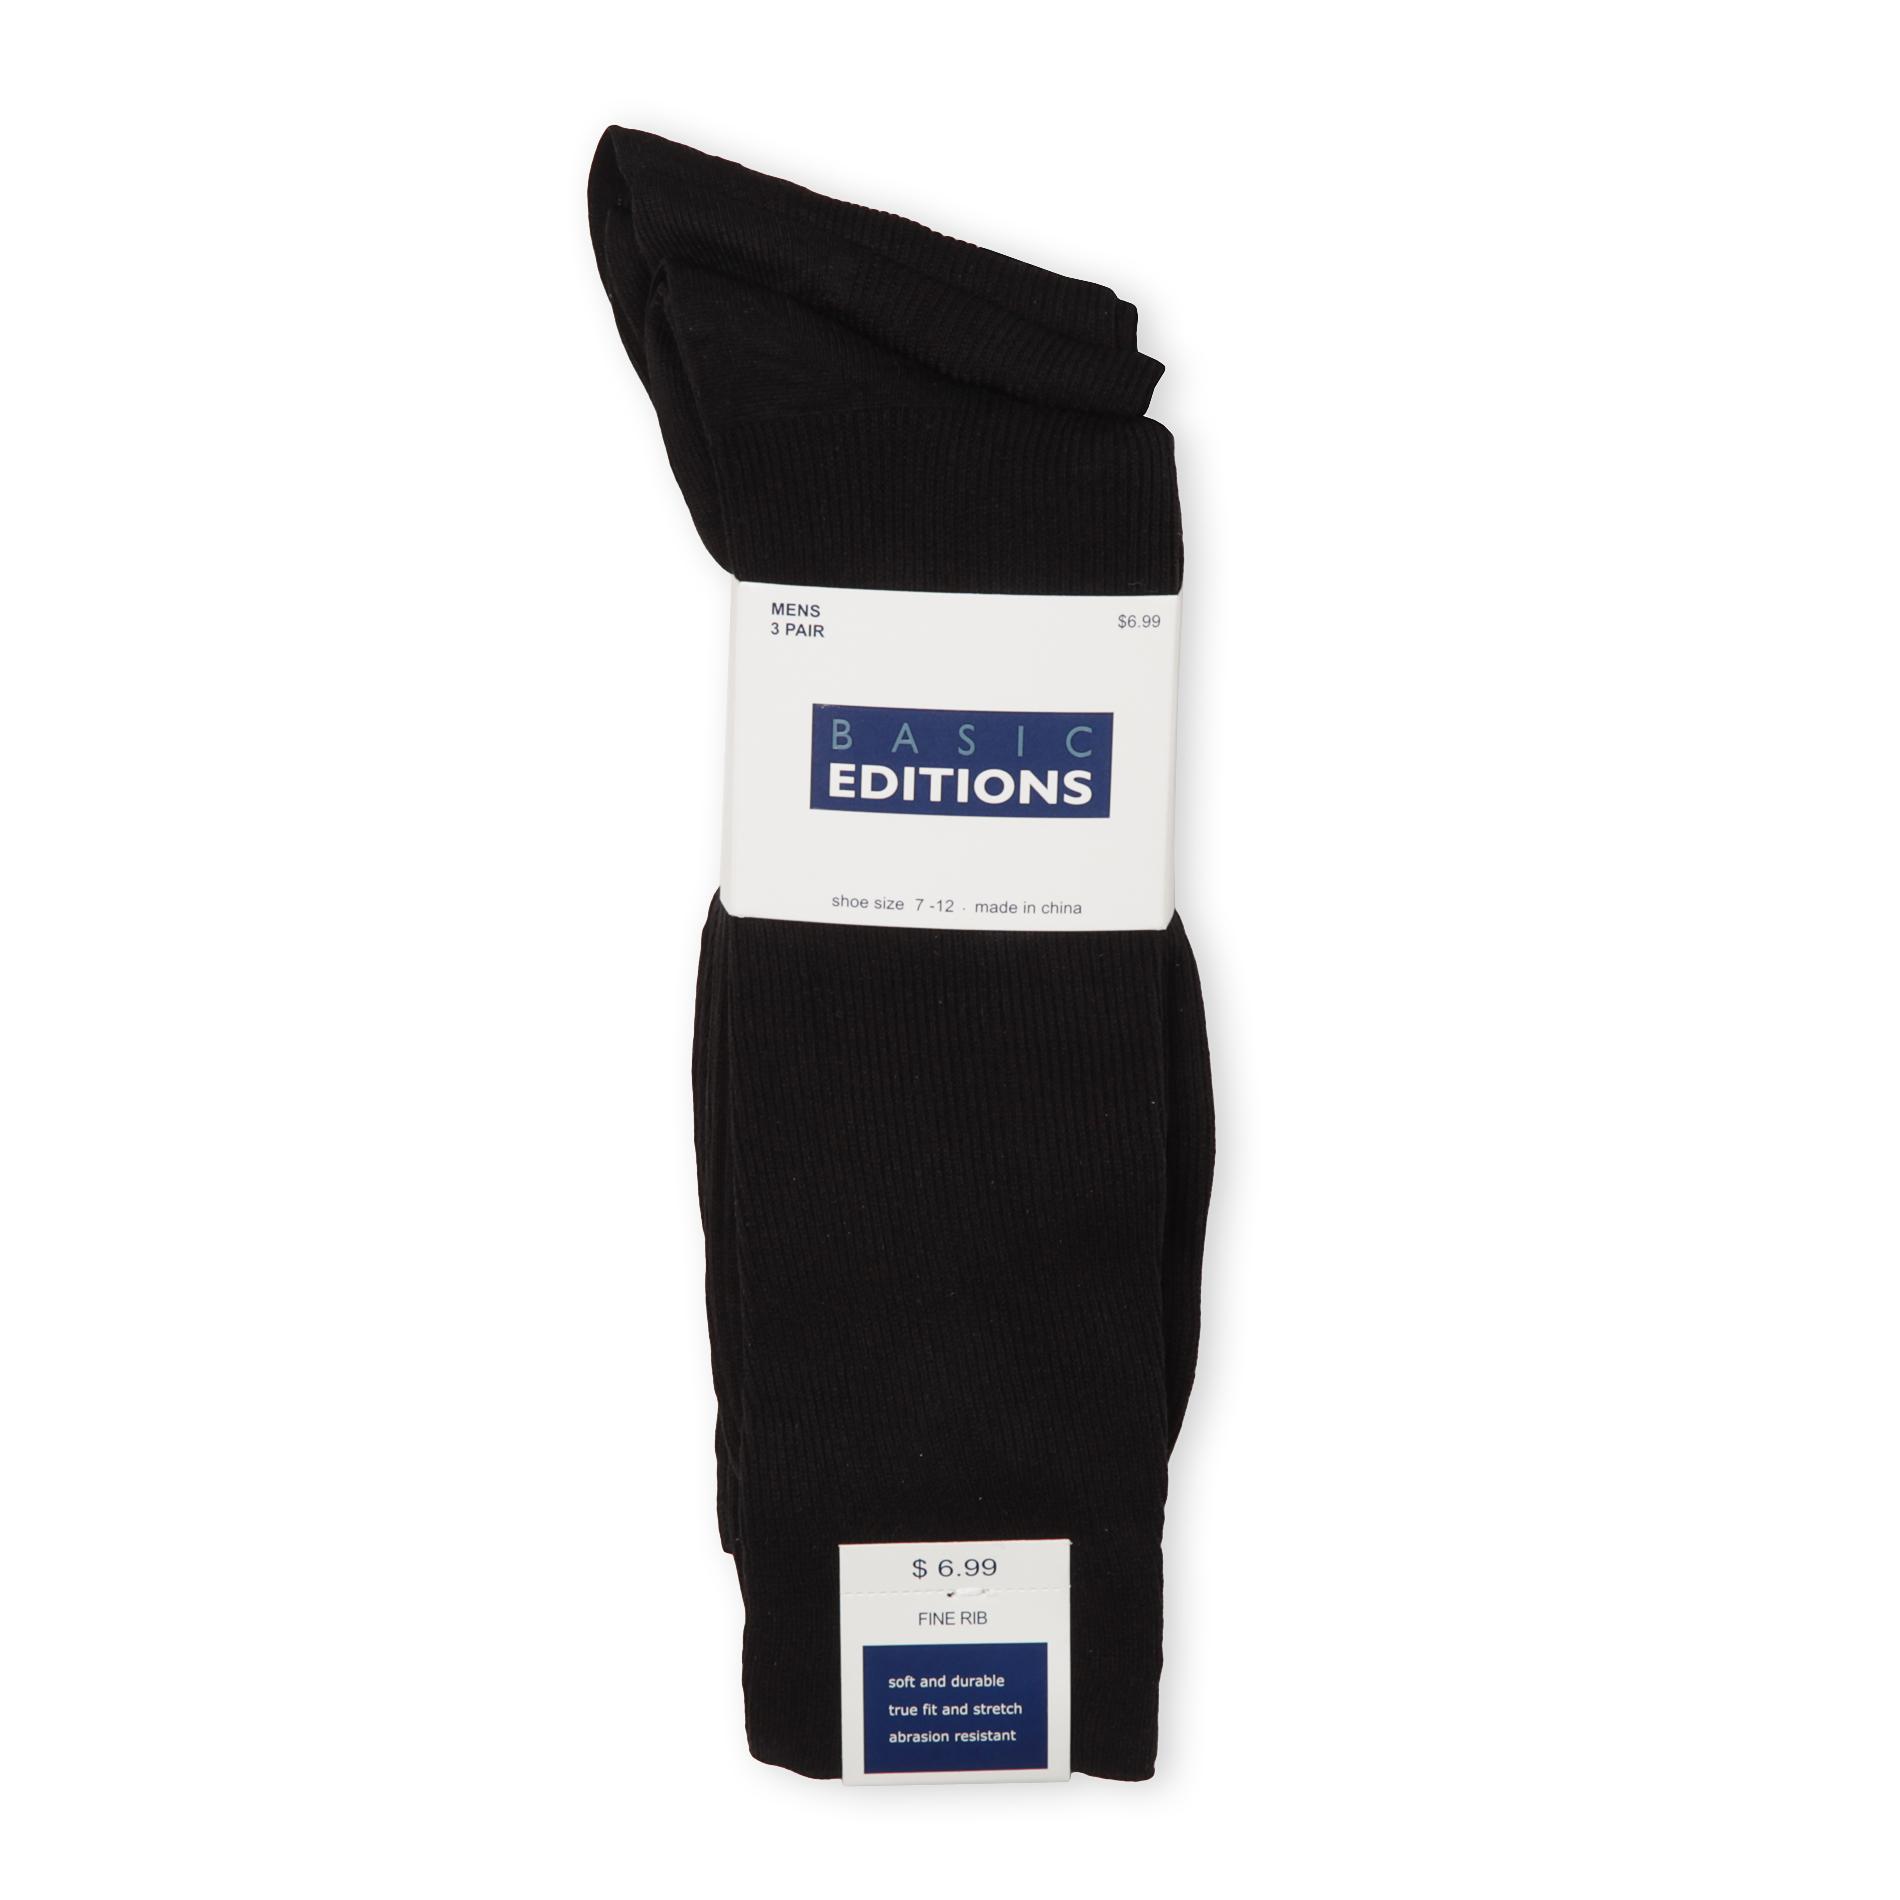 Basic Editions Men's 3-Pairs Rib Knit Socks